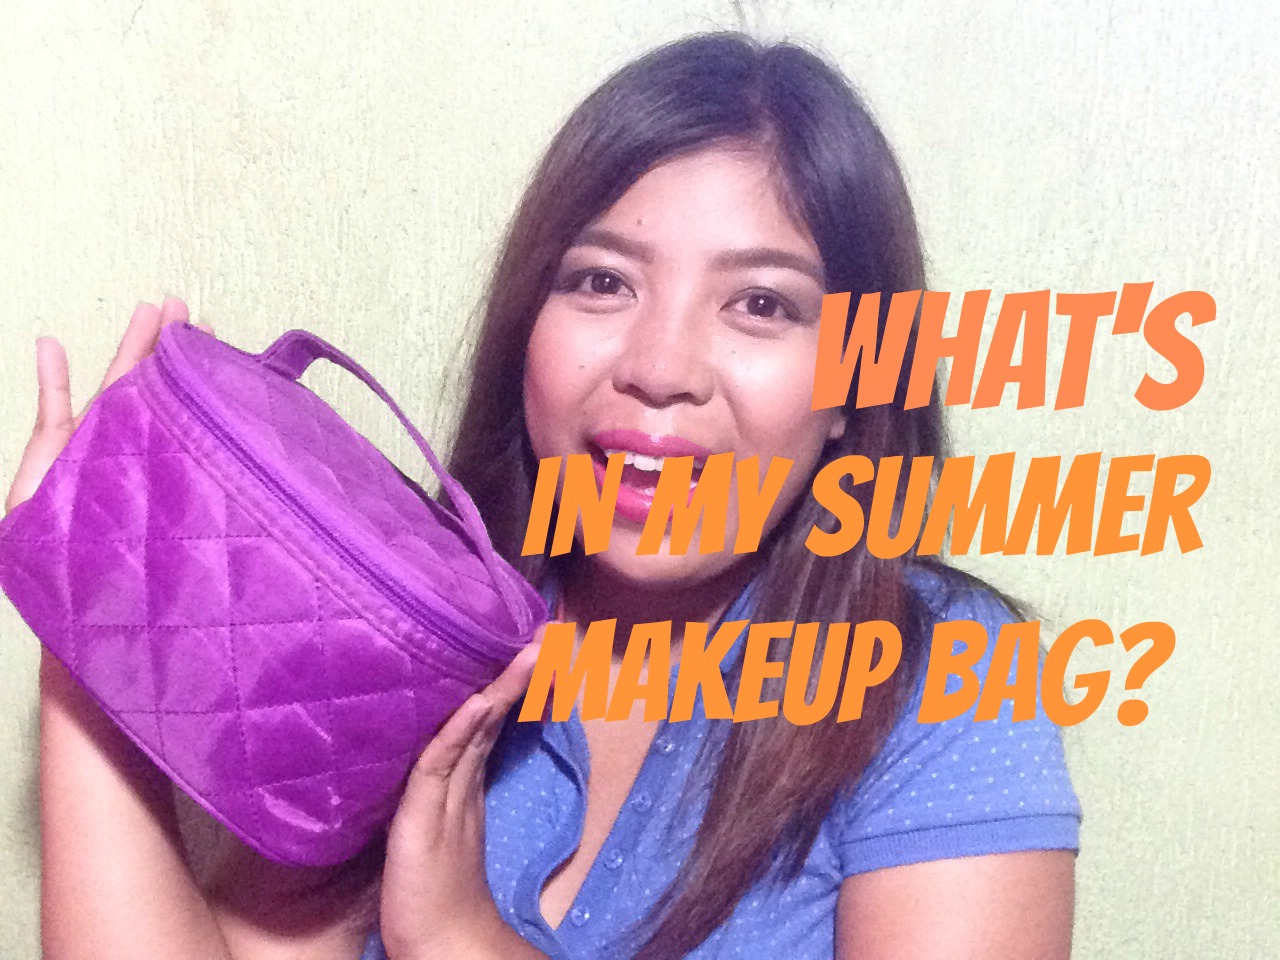 summer makeup essentials